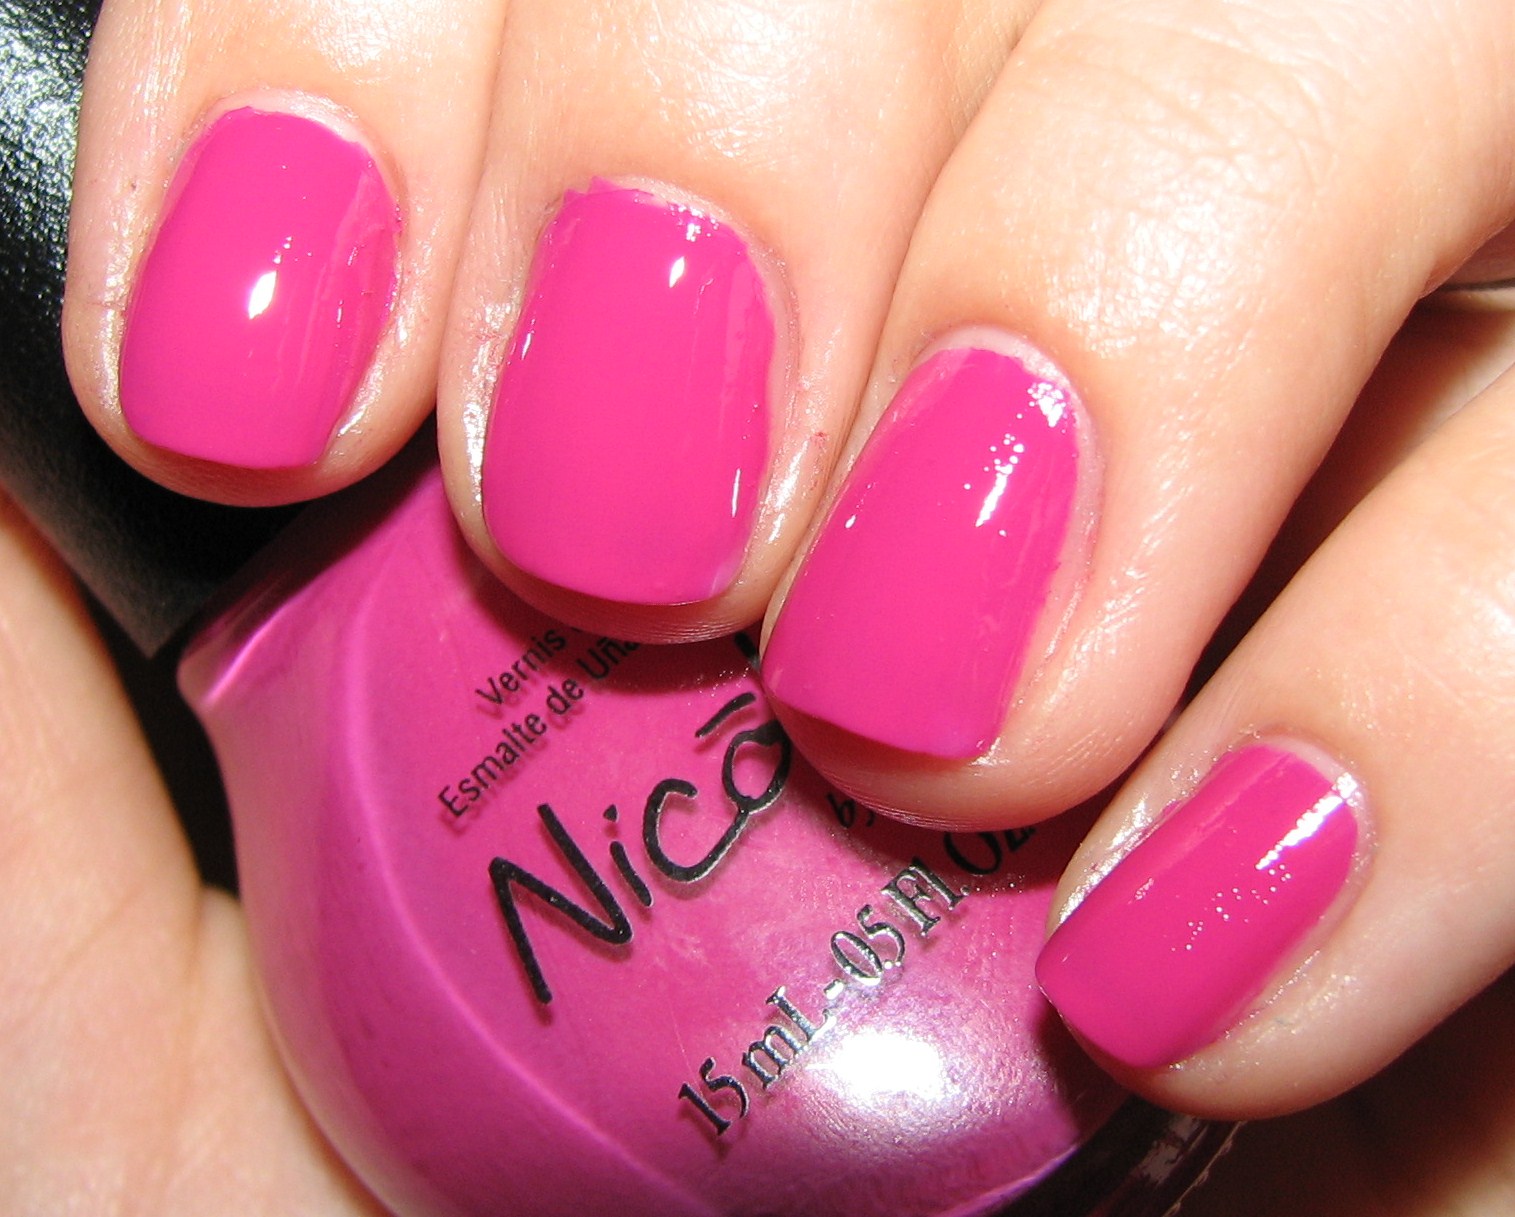 nicole by opi kardashian kolors nail polish - cvs exclusives spring 2012